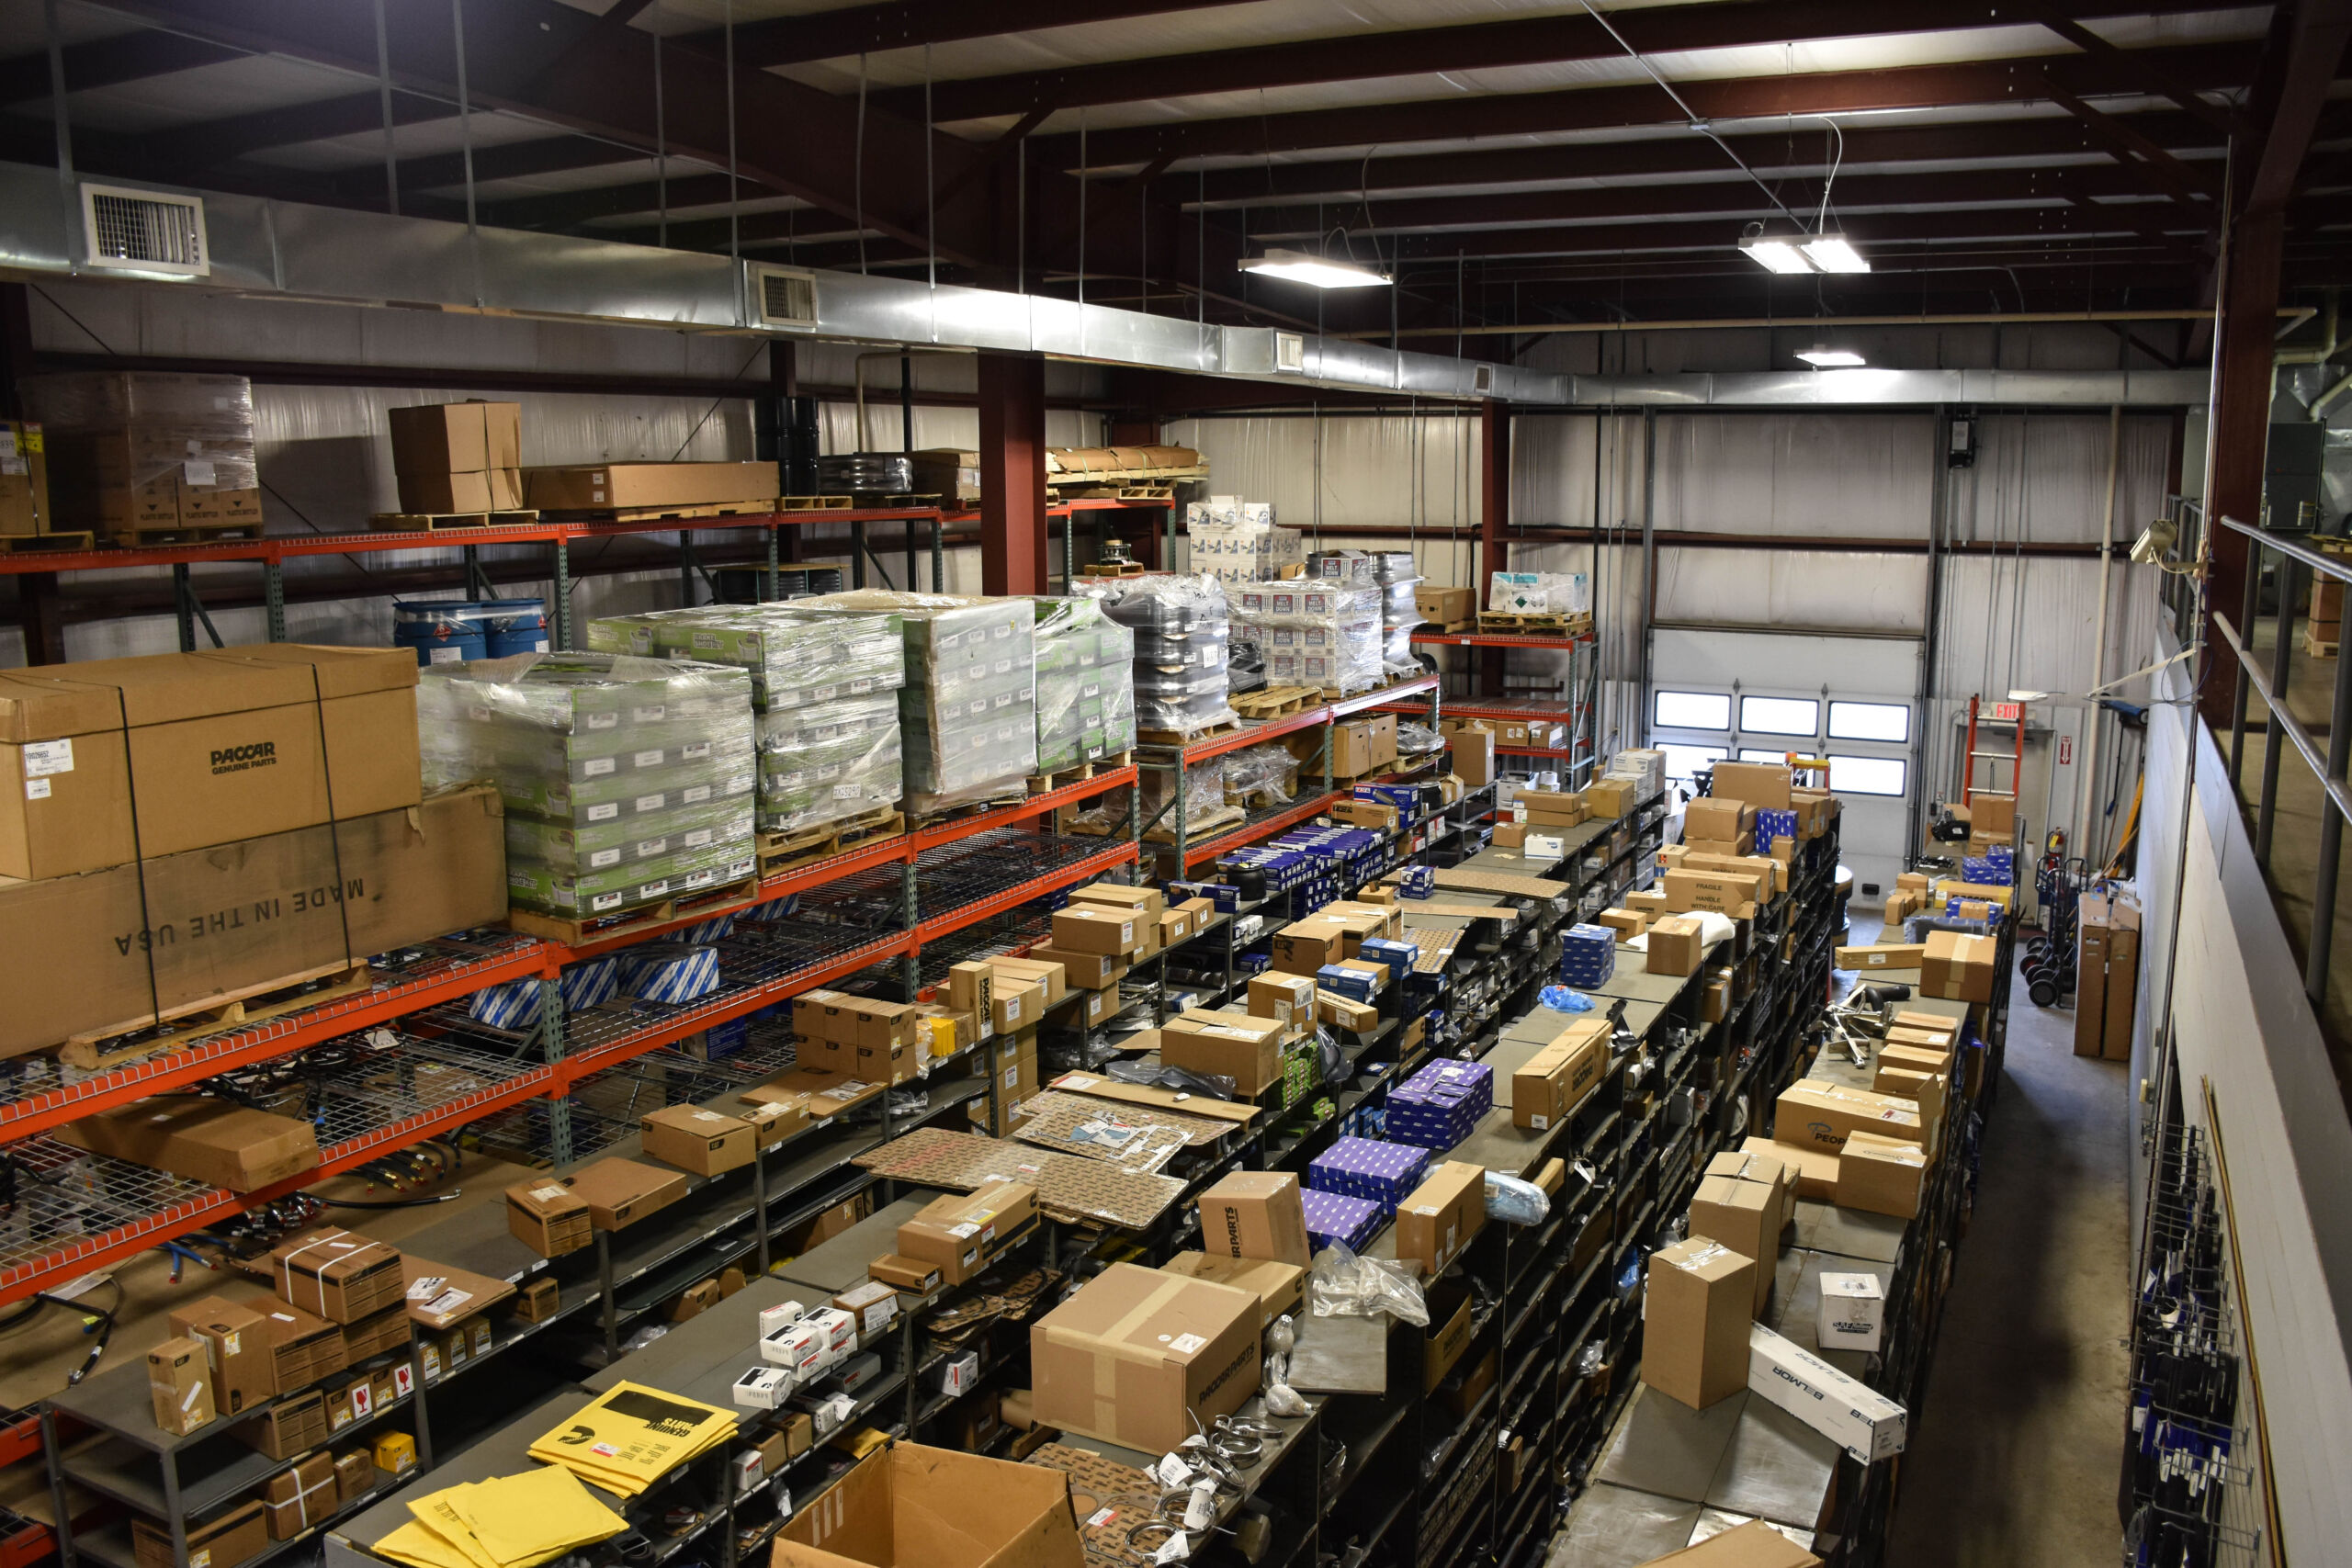 Parts Warehouse regarding supply chain constraints